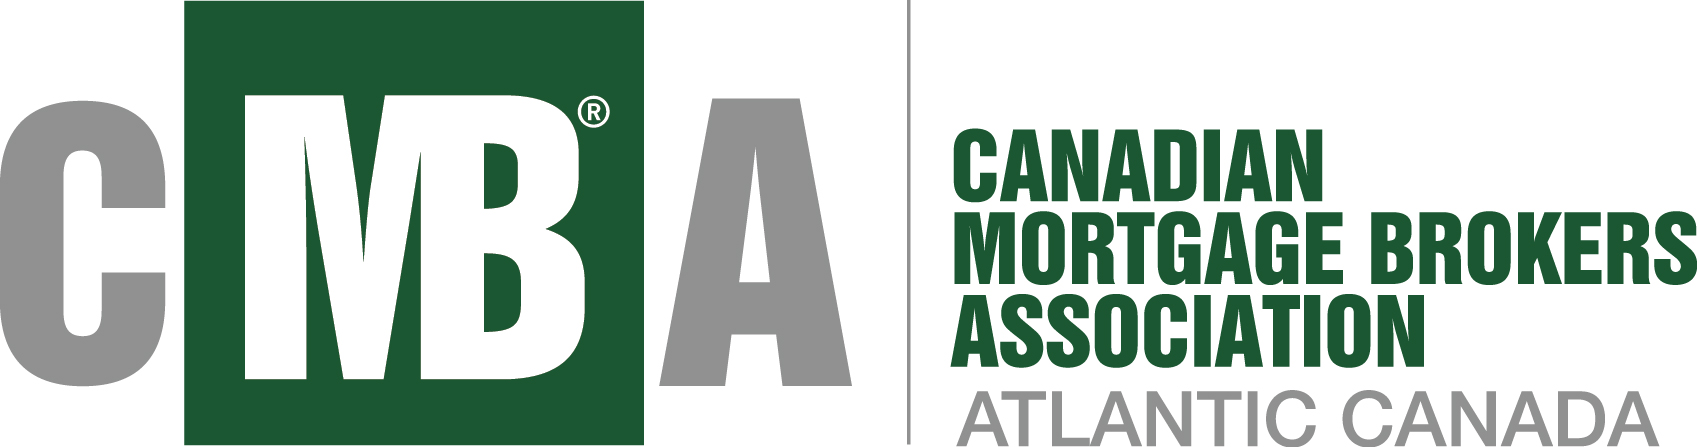 CMBA_logo-Atlantic